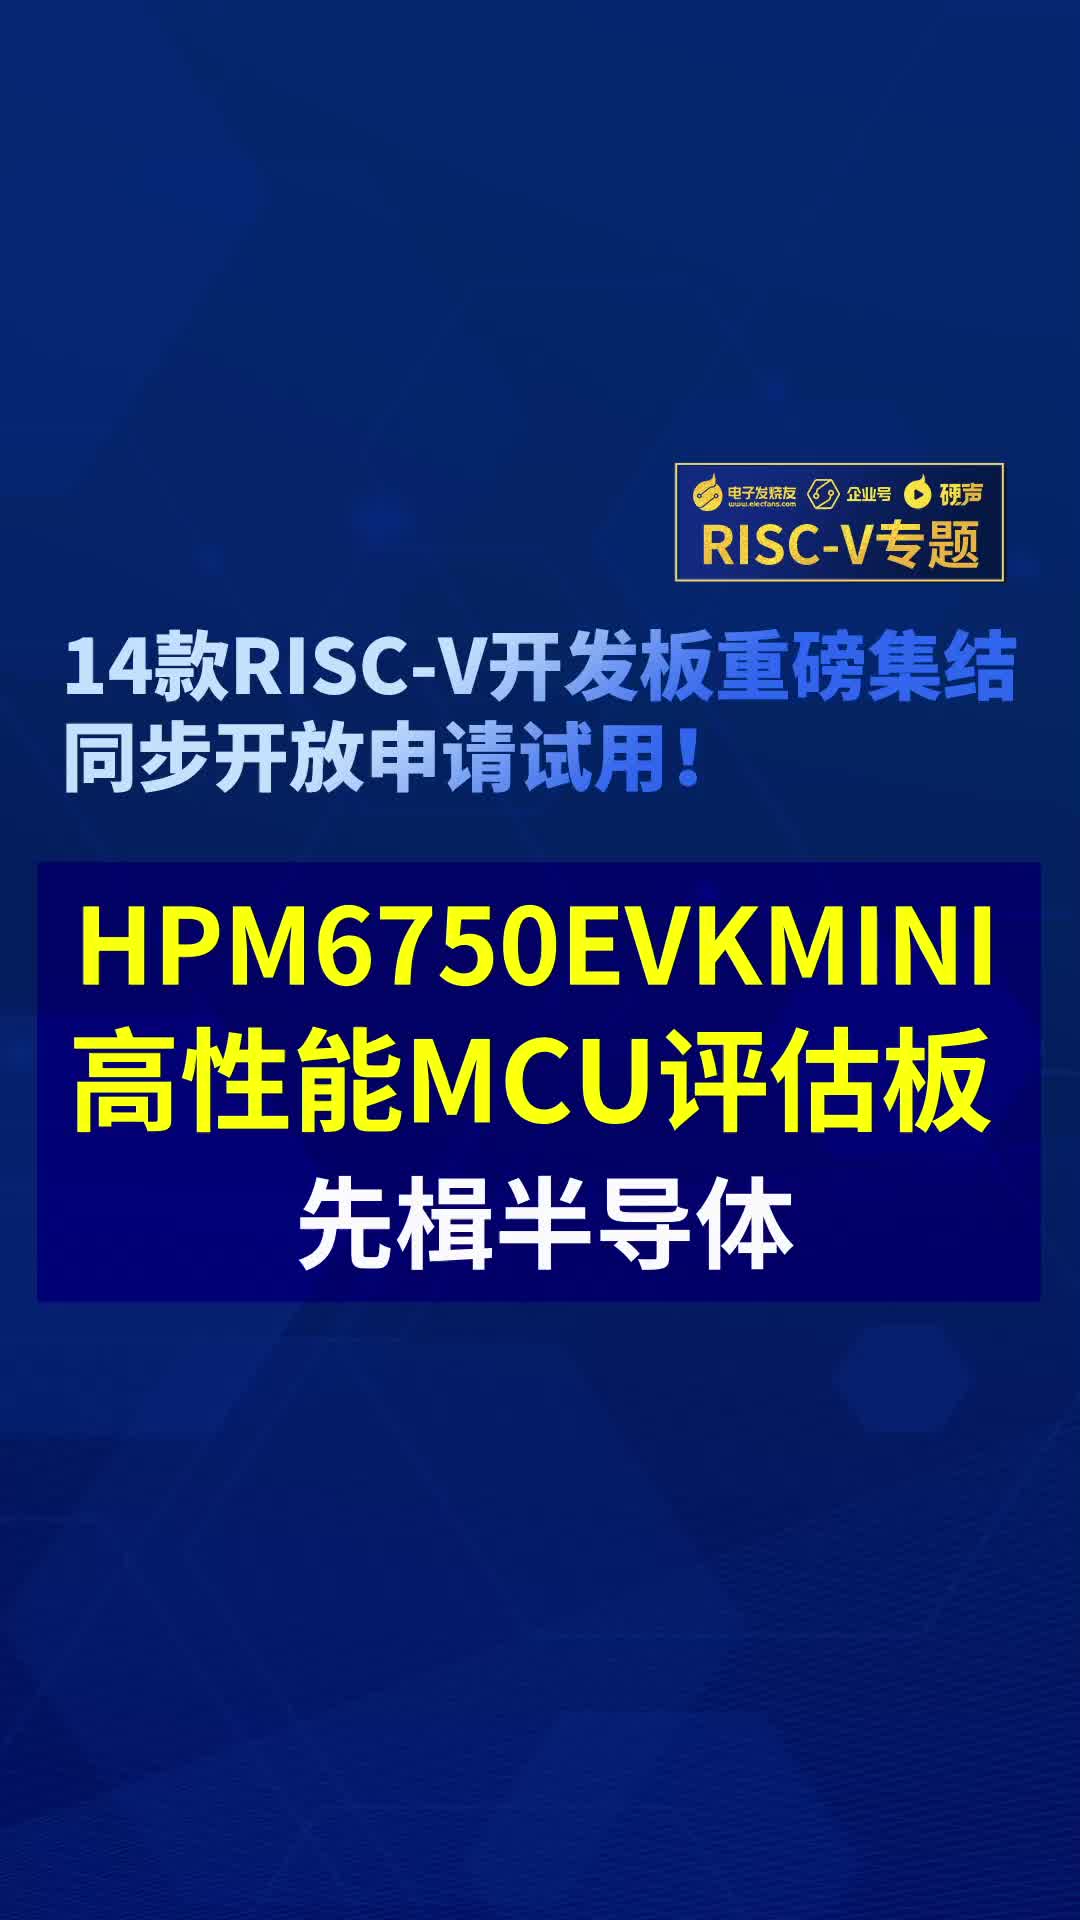 【RISC-V专题】先楫半导体HPM6750EVKMINI评估板免费试用#RISC-V开发板评测 